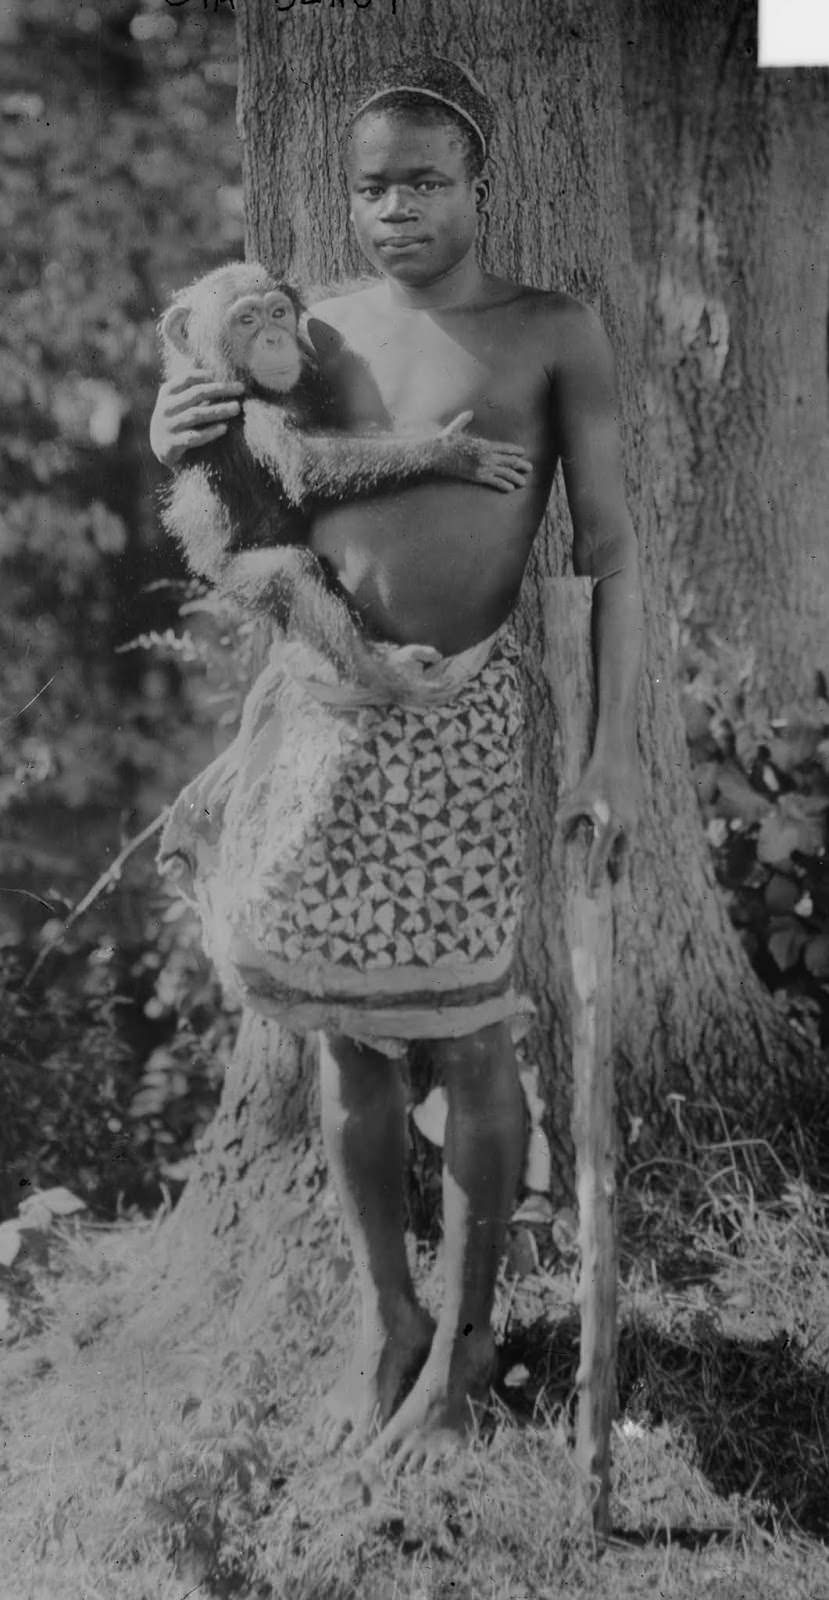 Ota Benga, a Congolese man, in New York’s Bronx Zoo in 1906.